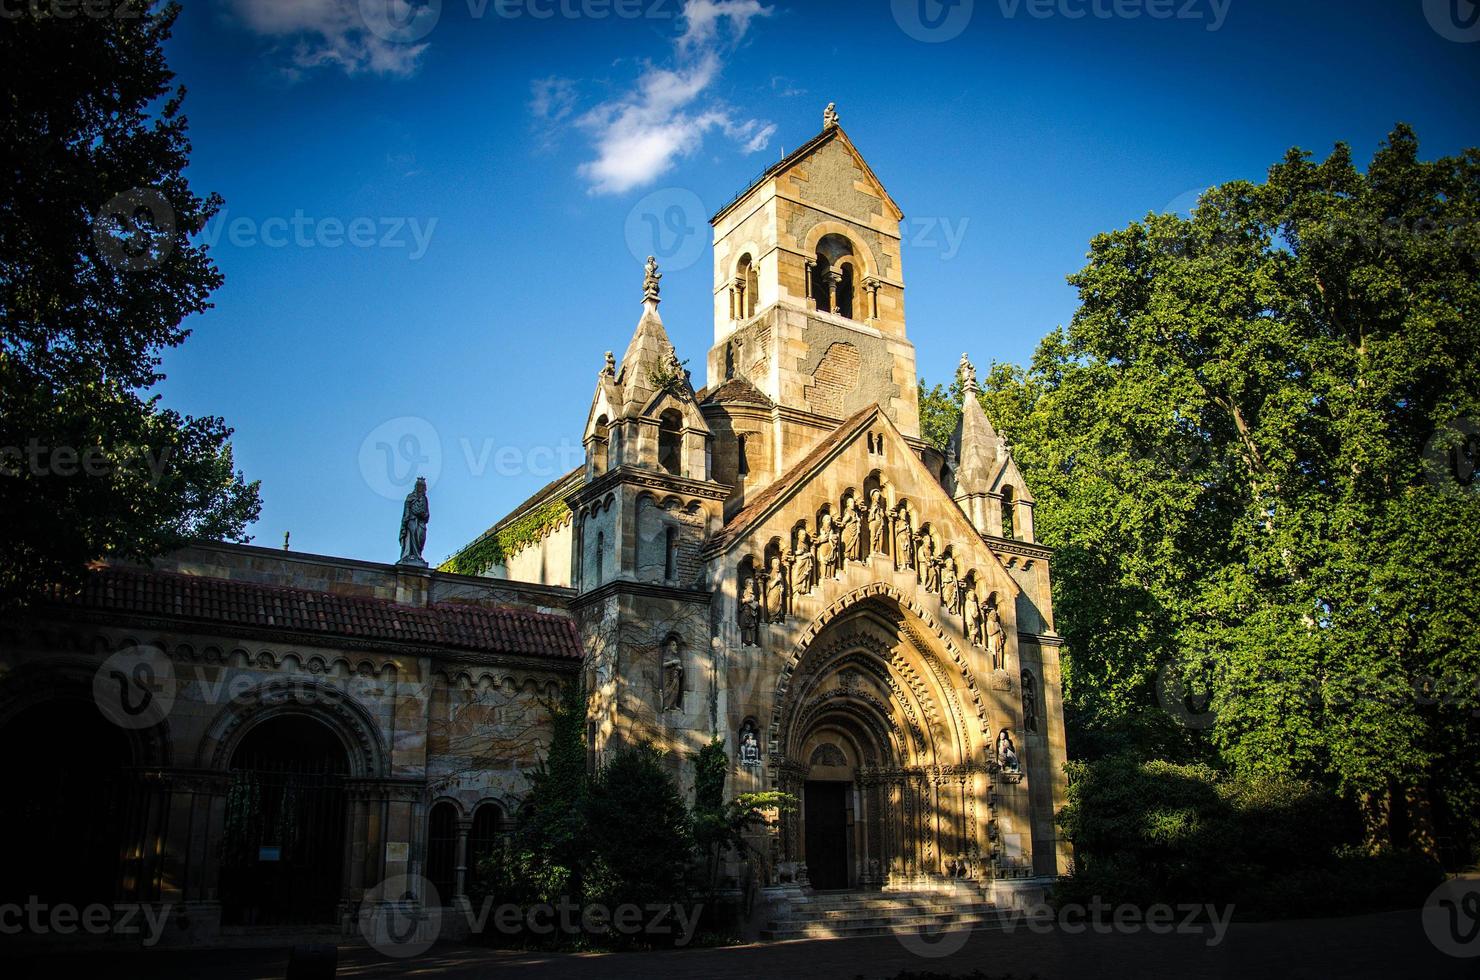 alte jaki kapolna kirche in der nähe von schloss vajdahunyad in budapest, ungarn foto